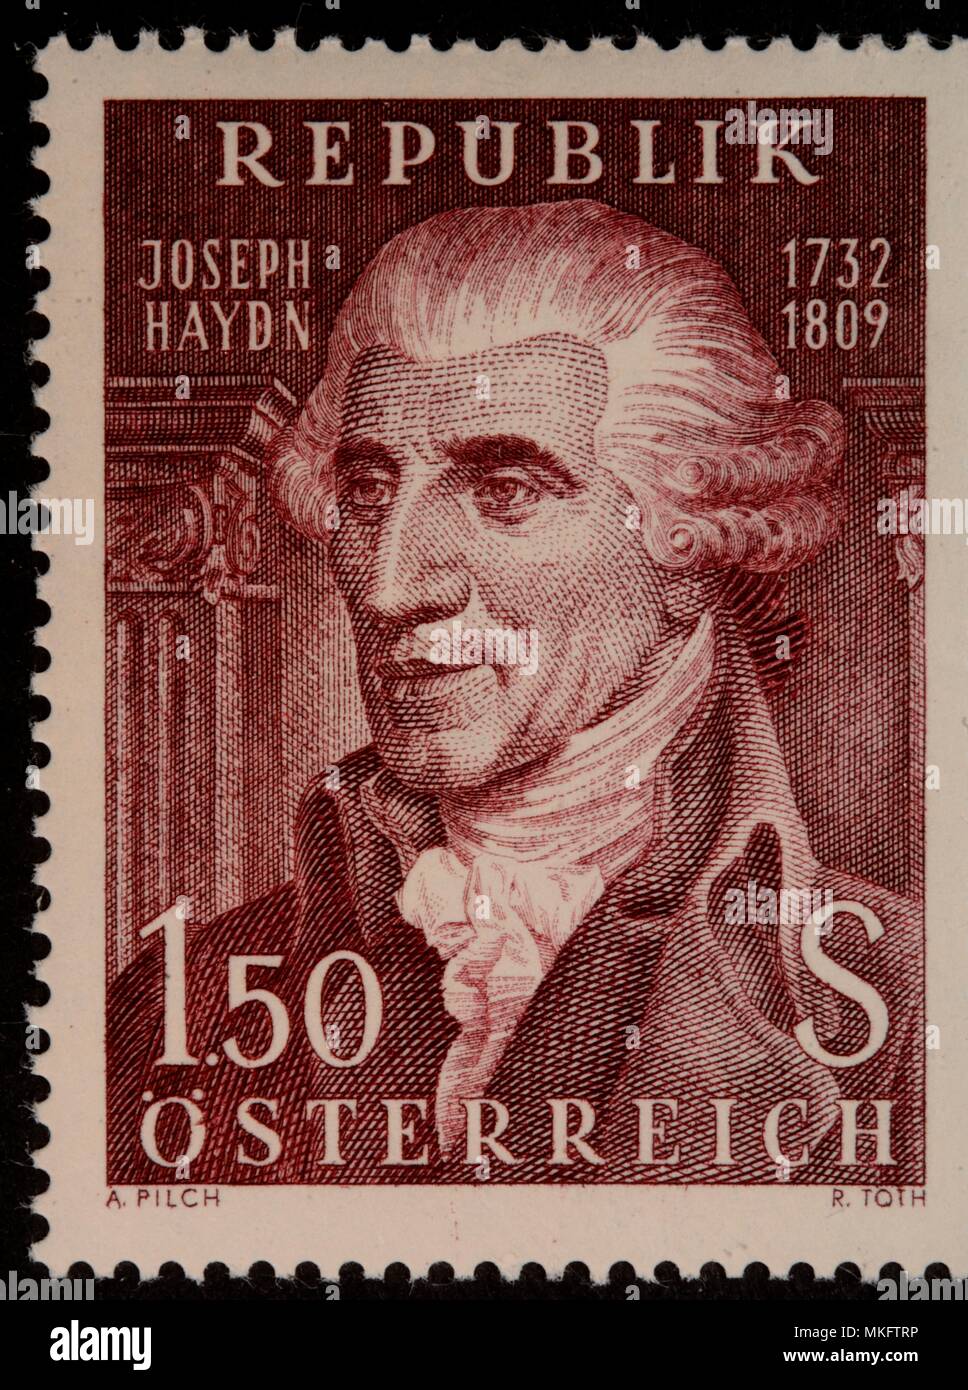 Joseph Haydn, an Austrian composer and musician, portrait on a Austrian stamp Stock Photo